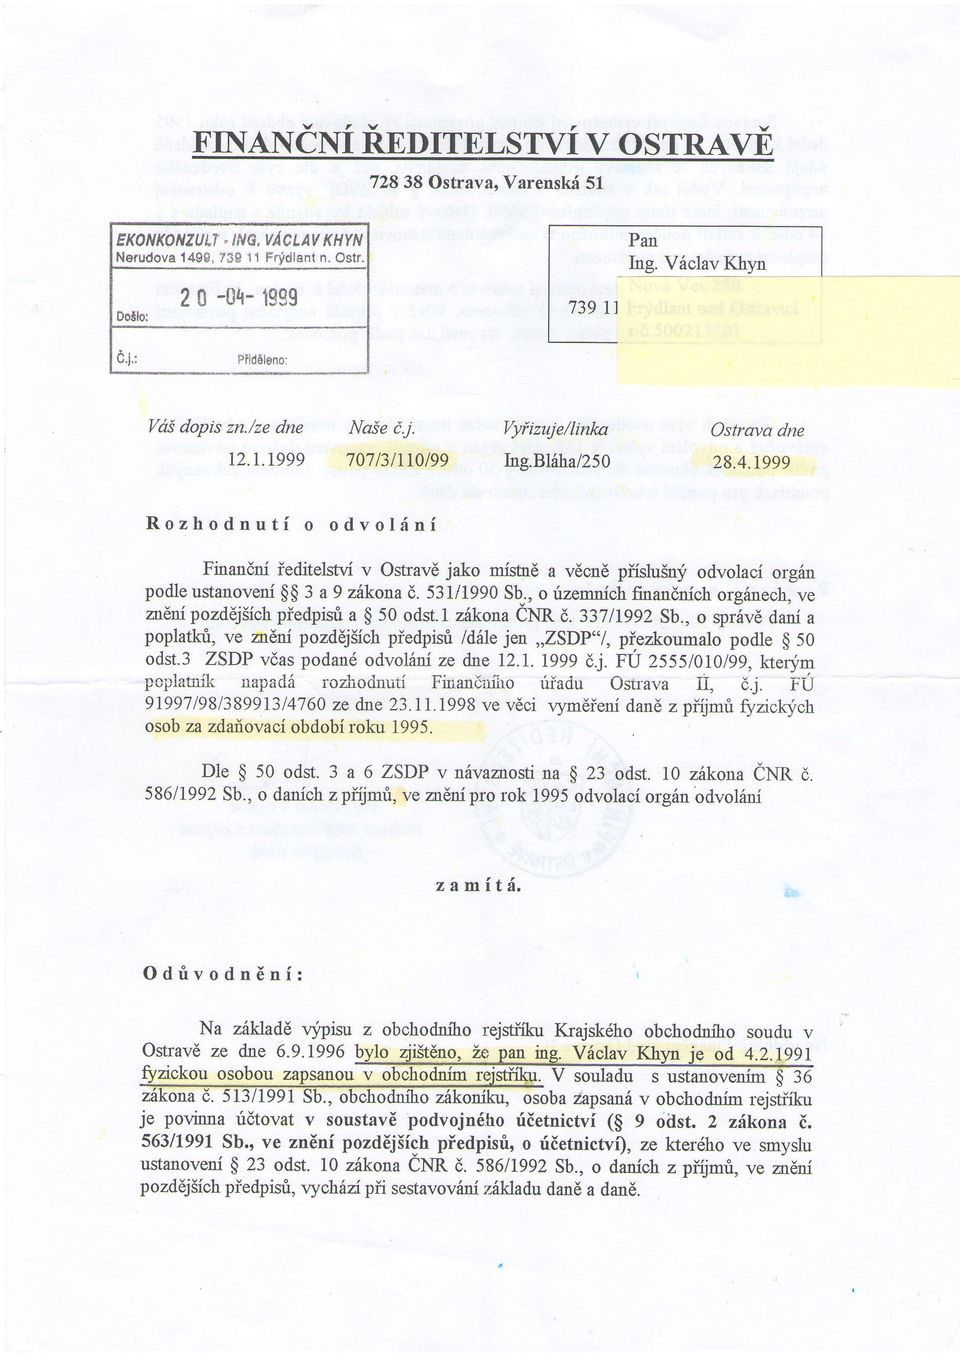 531/1990 SQ,, o izemnichfinandnich orginech, ve nlnpozd6jsich pr'edpis& a g 50 ods.1 zilkona iun r. ntlrggz Sb.